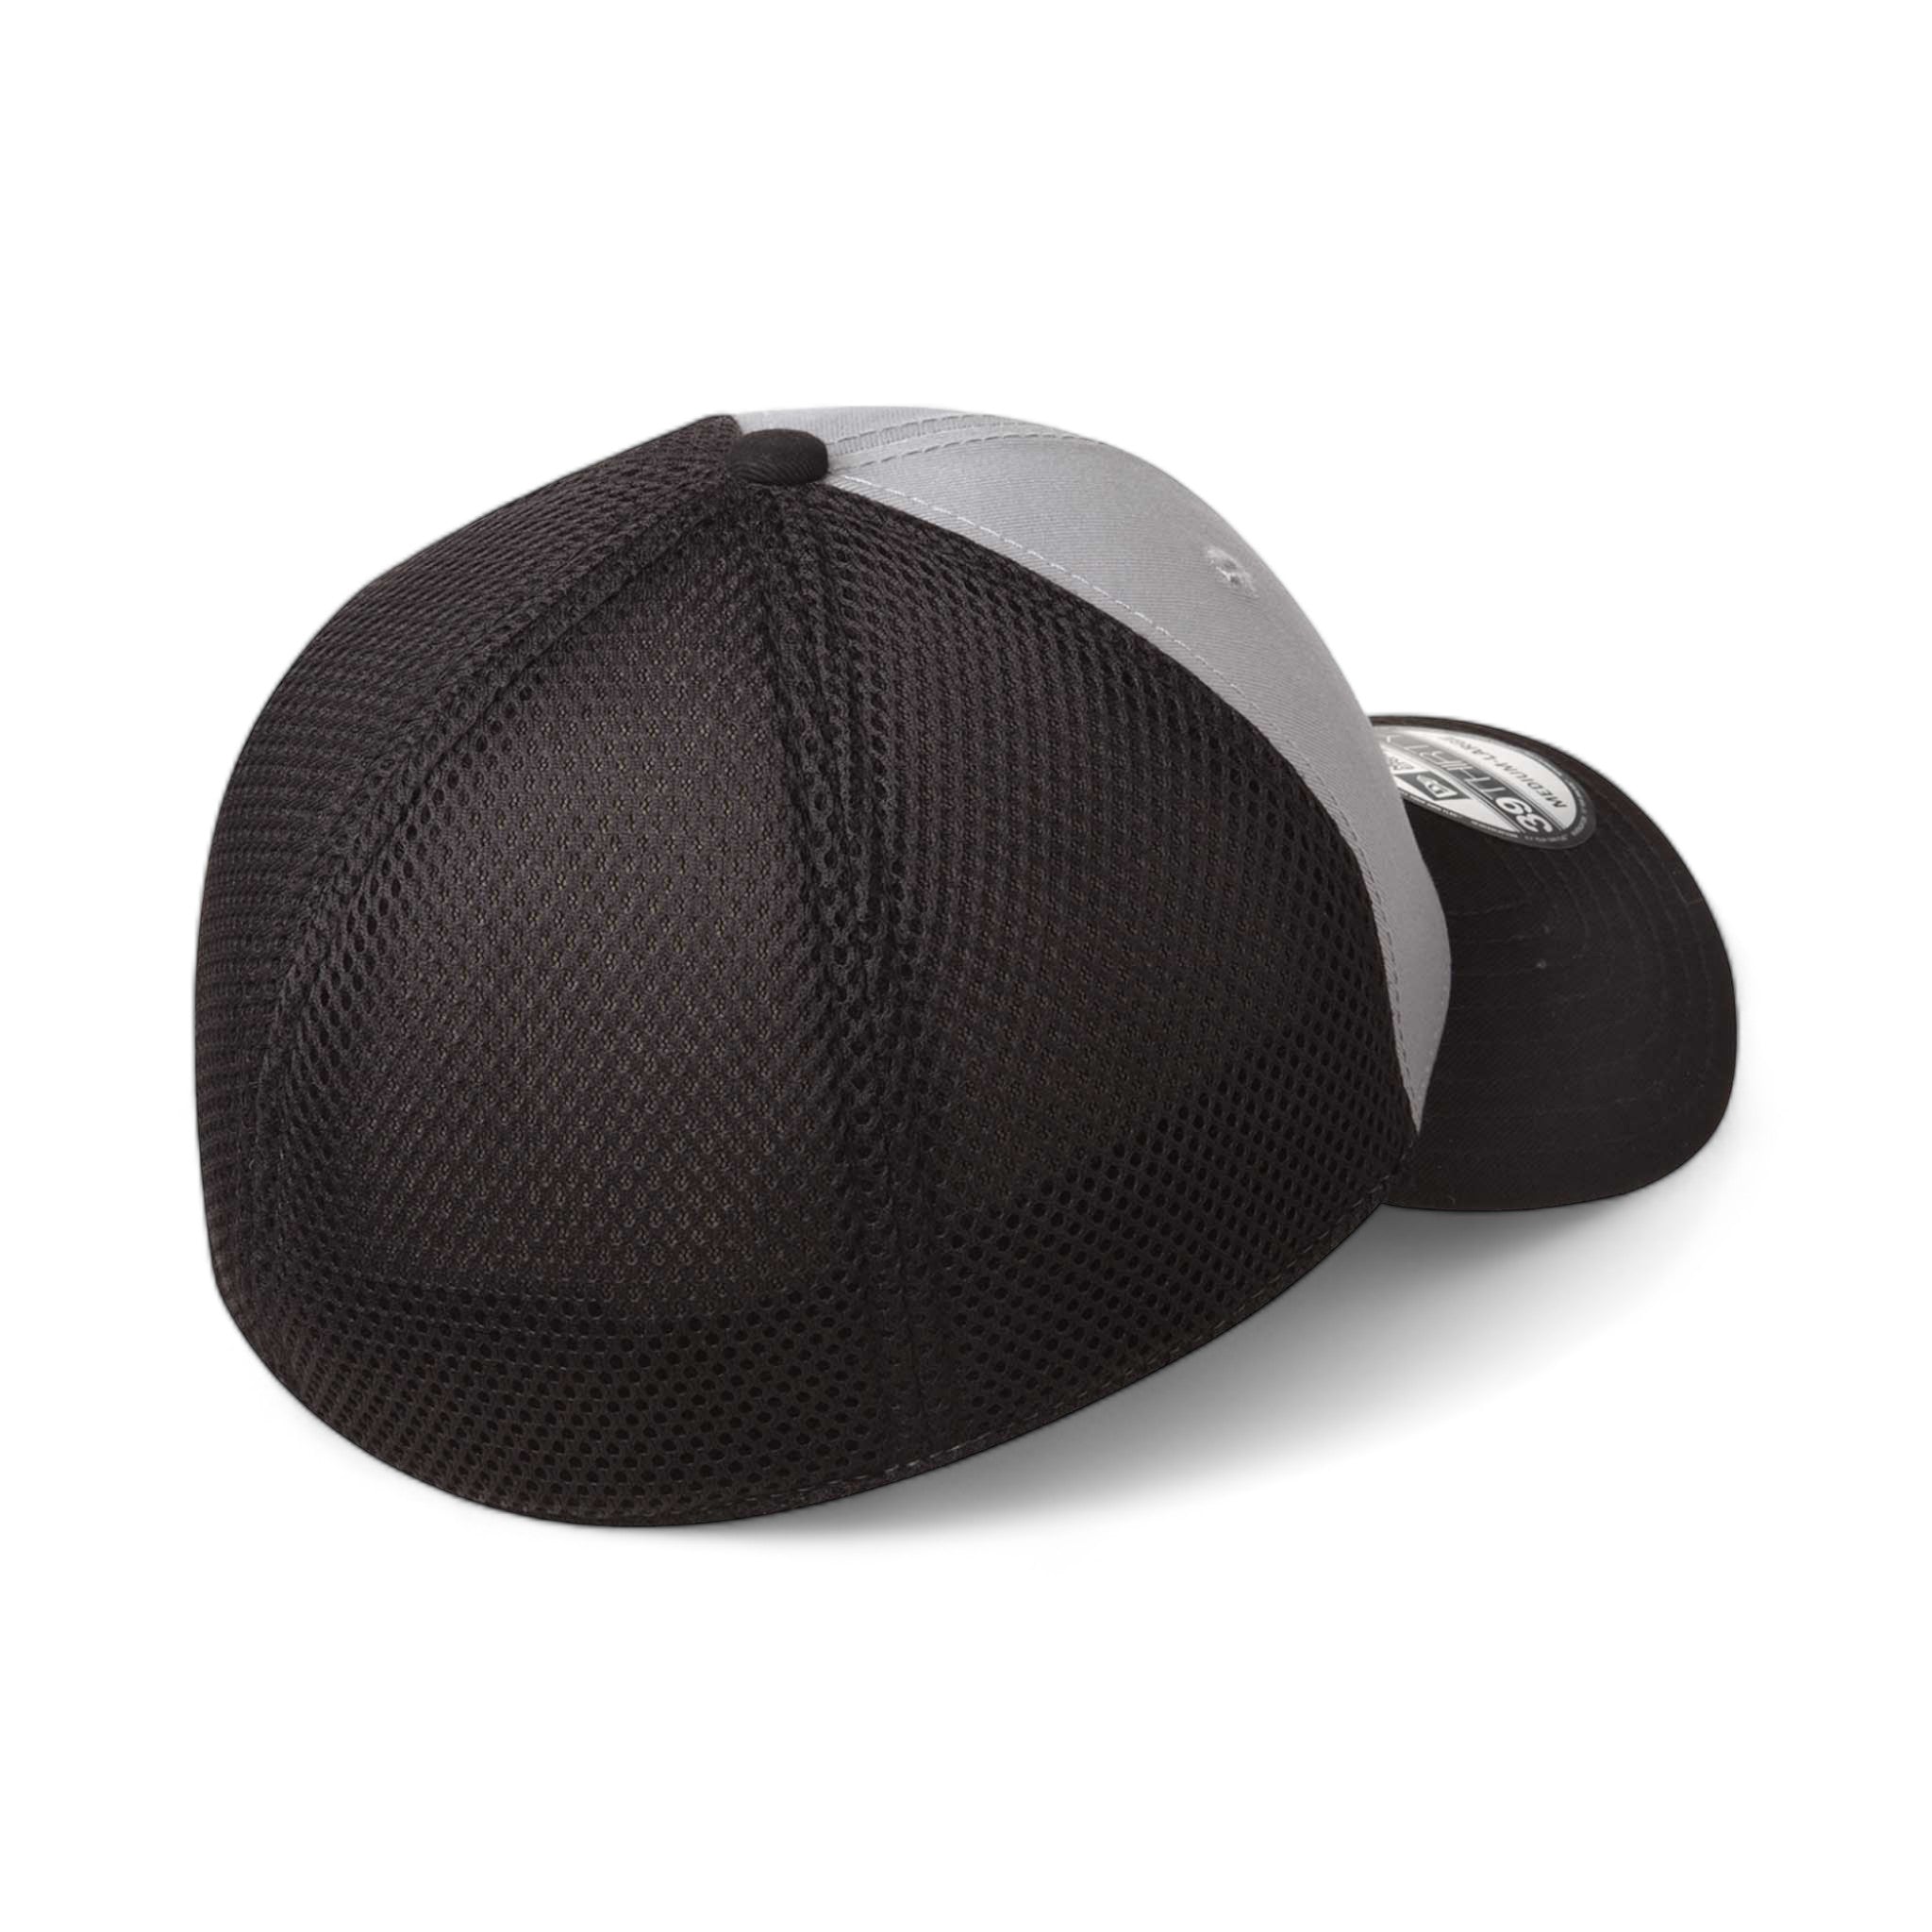 Back view of New Era NE1020 custom hat in grey and black